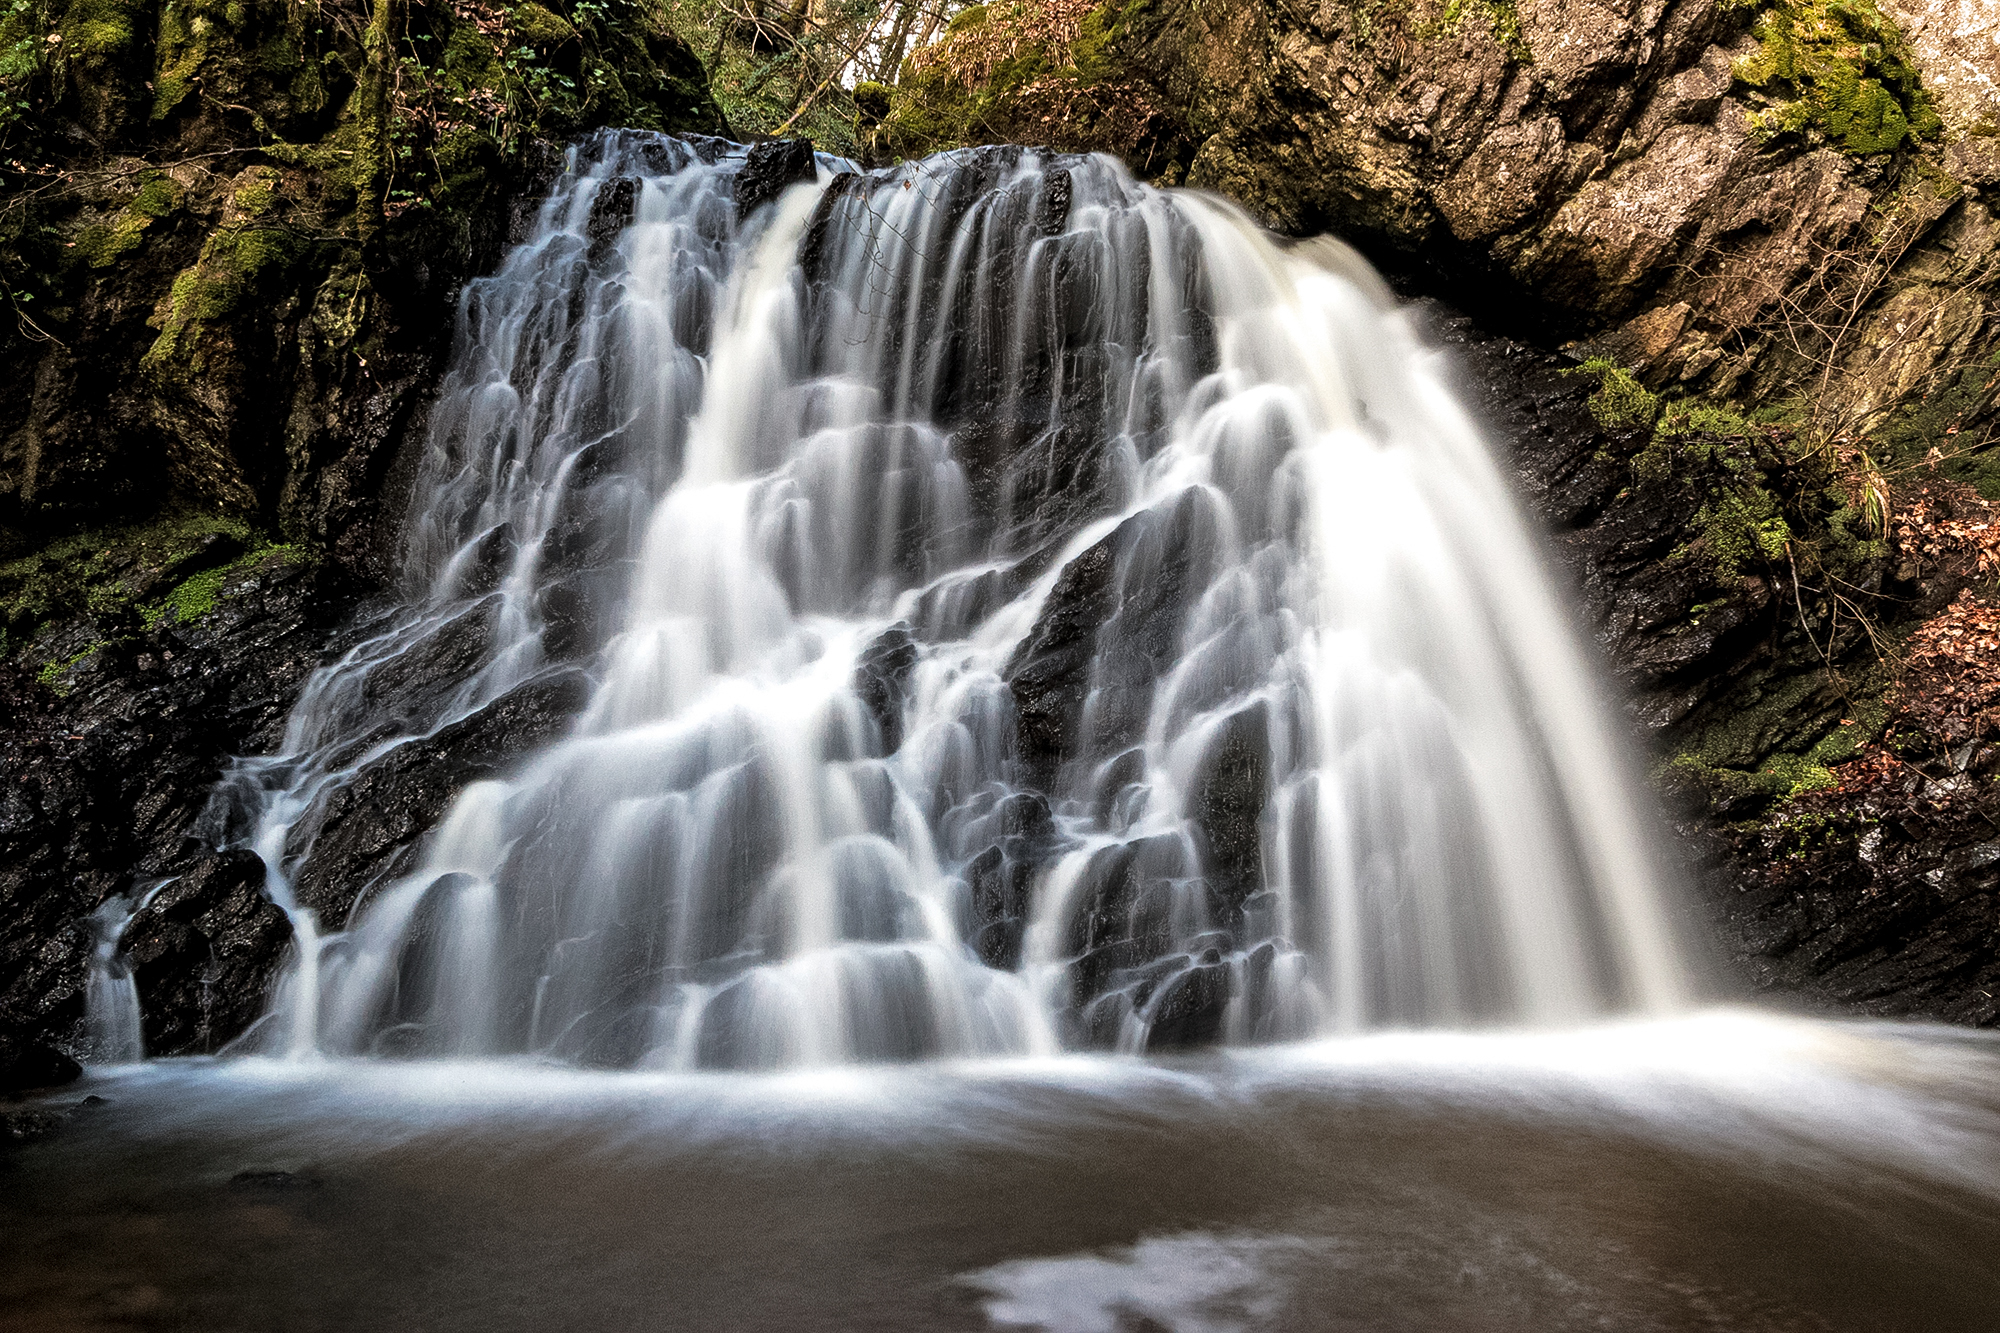 The Fairy Glen waterfall